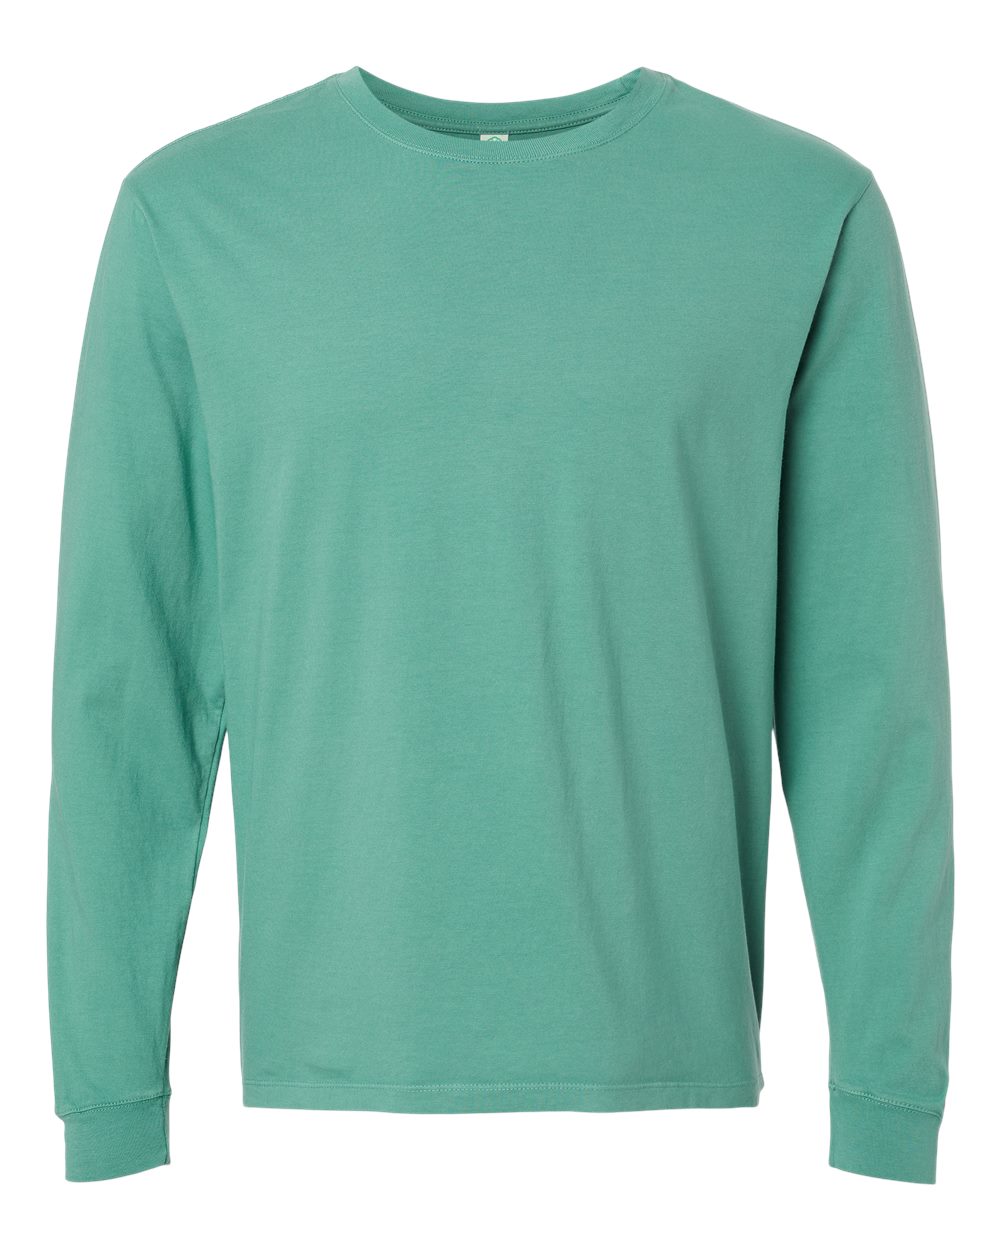 Softshirts® Unisex Organic Cotton Long-Sleeve Shirt in green